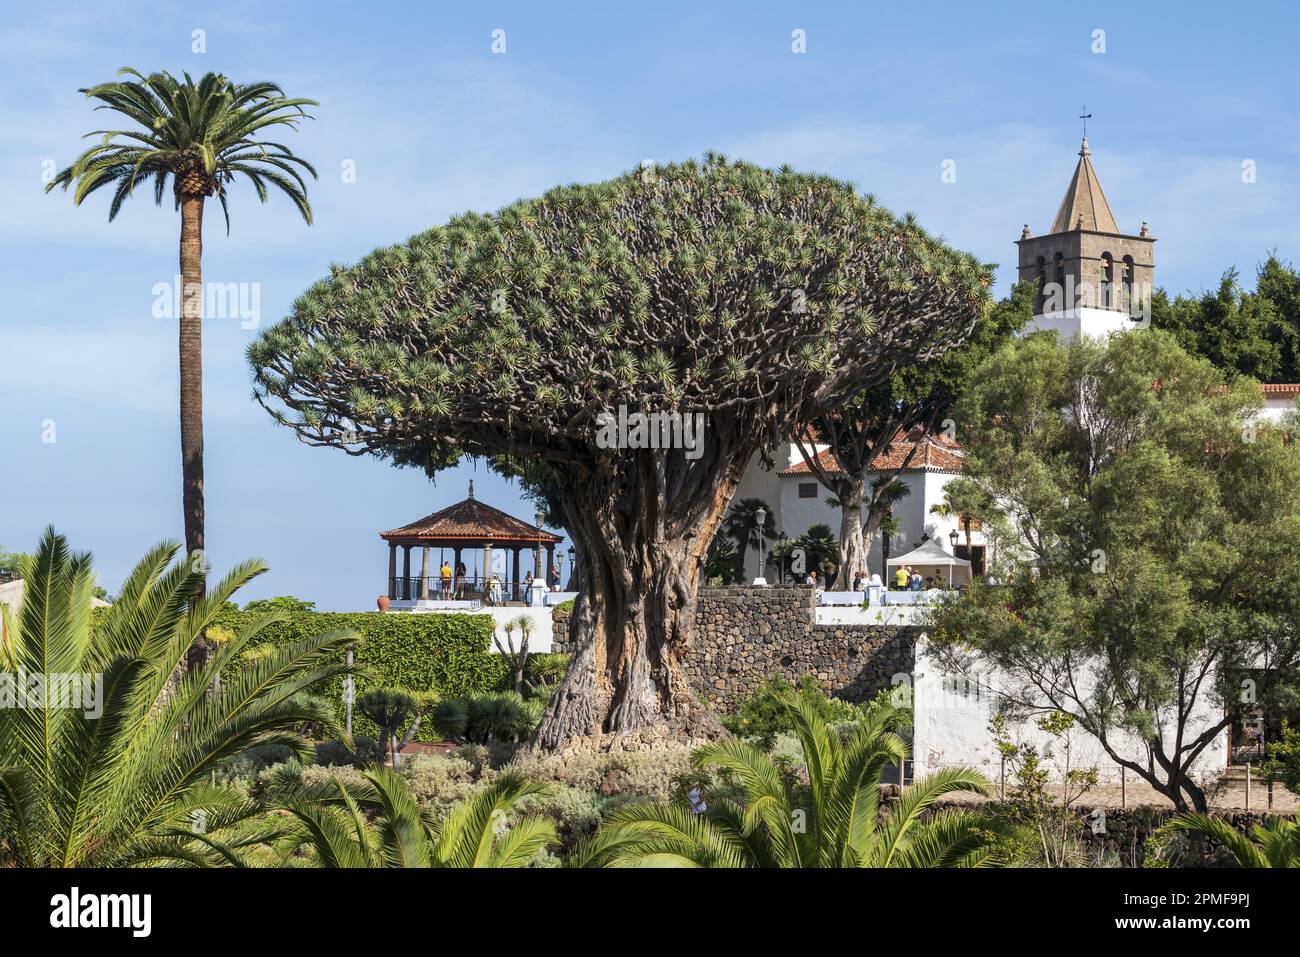 Spagna, Isole Canarie, Tenerife, Icod de los Vinos, Parco Drago (Parque del Drago), albero di drago (Dracaena Draco canariensis) di oltre 1000 anni Foto Stock